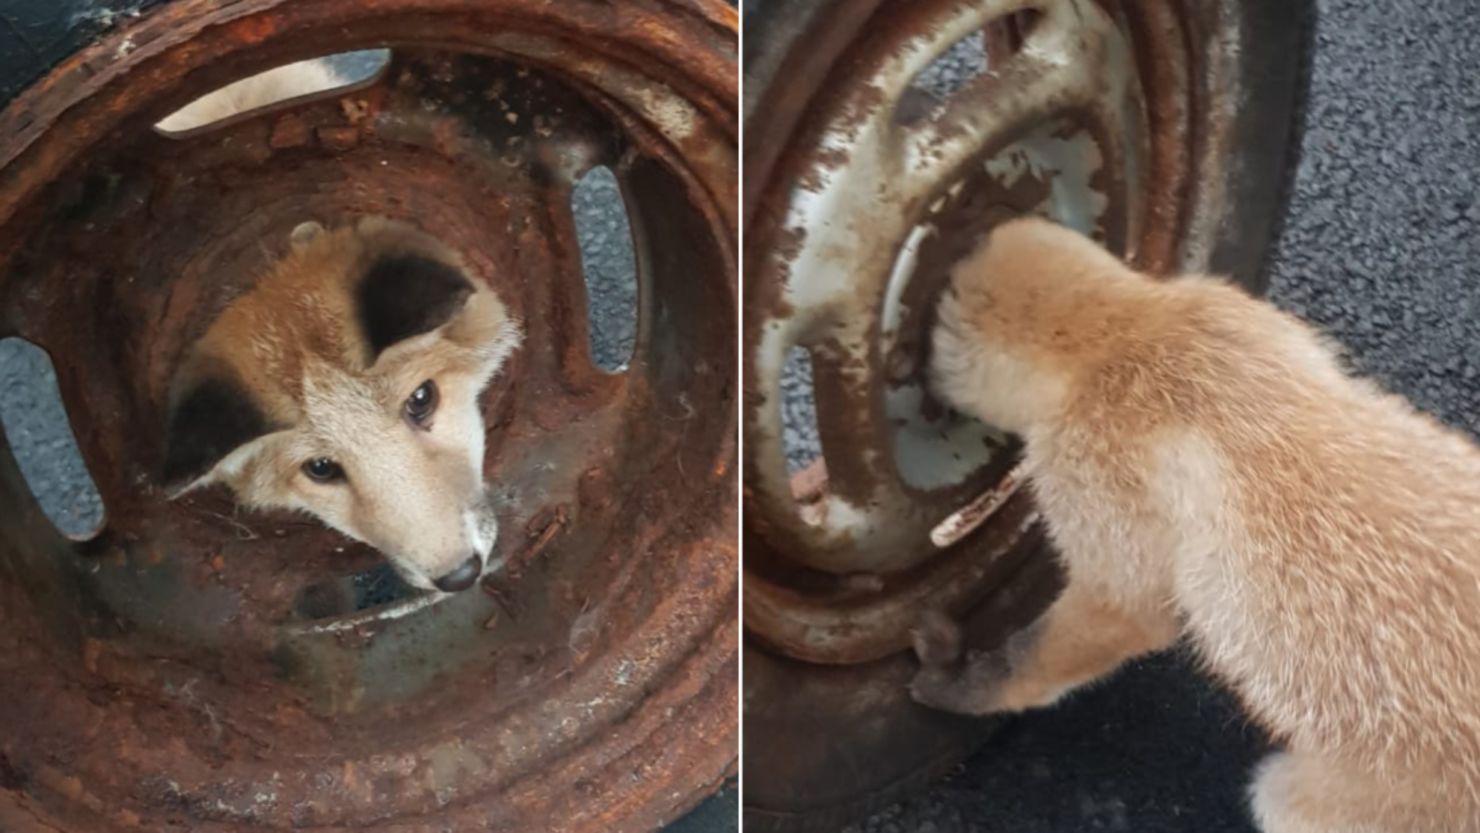 A Scottish fire station crew freed a fox cub that had got its head stuck in a wheel.